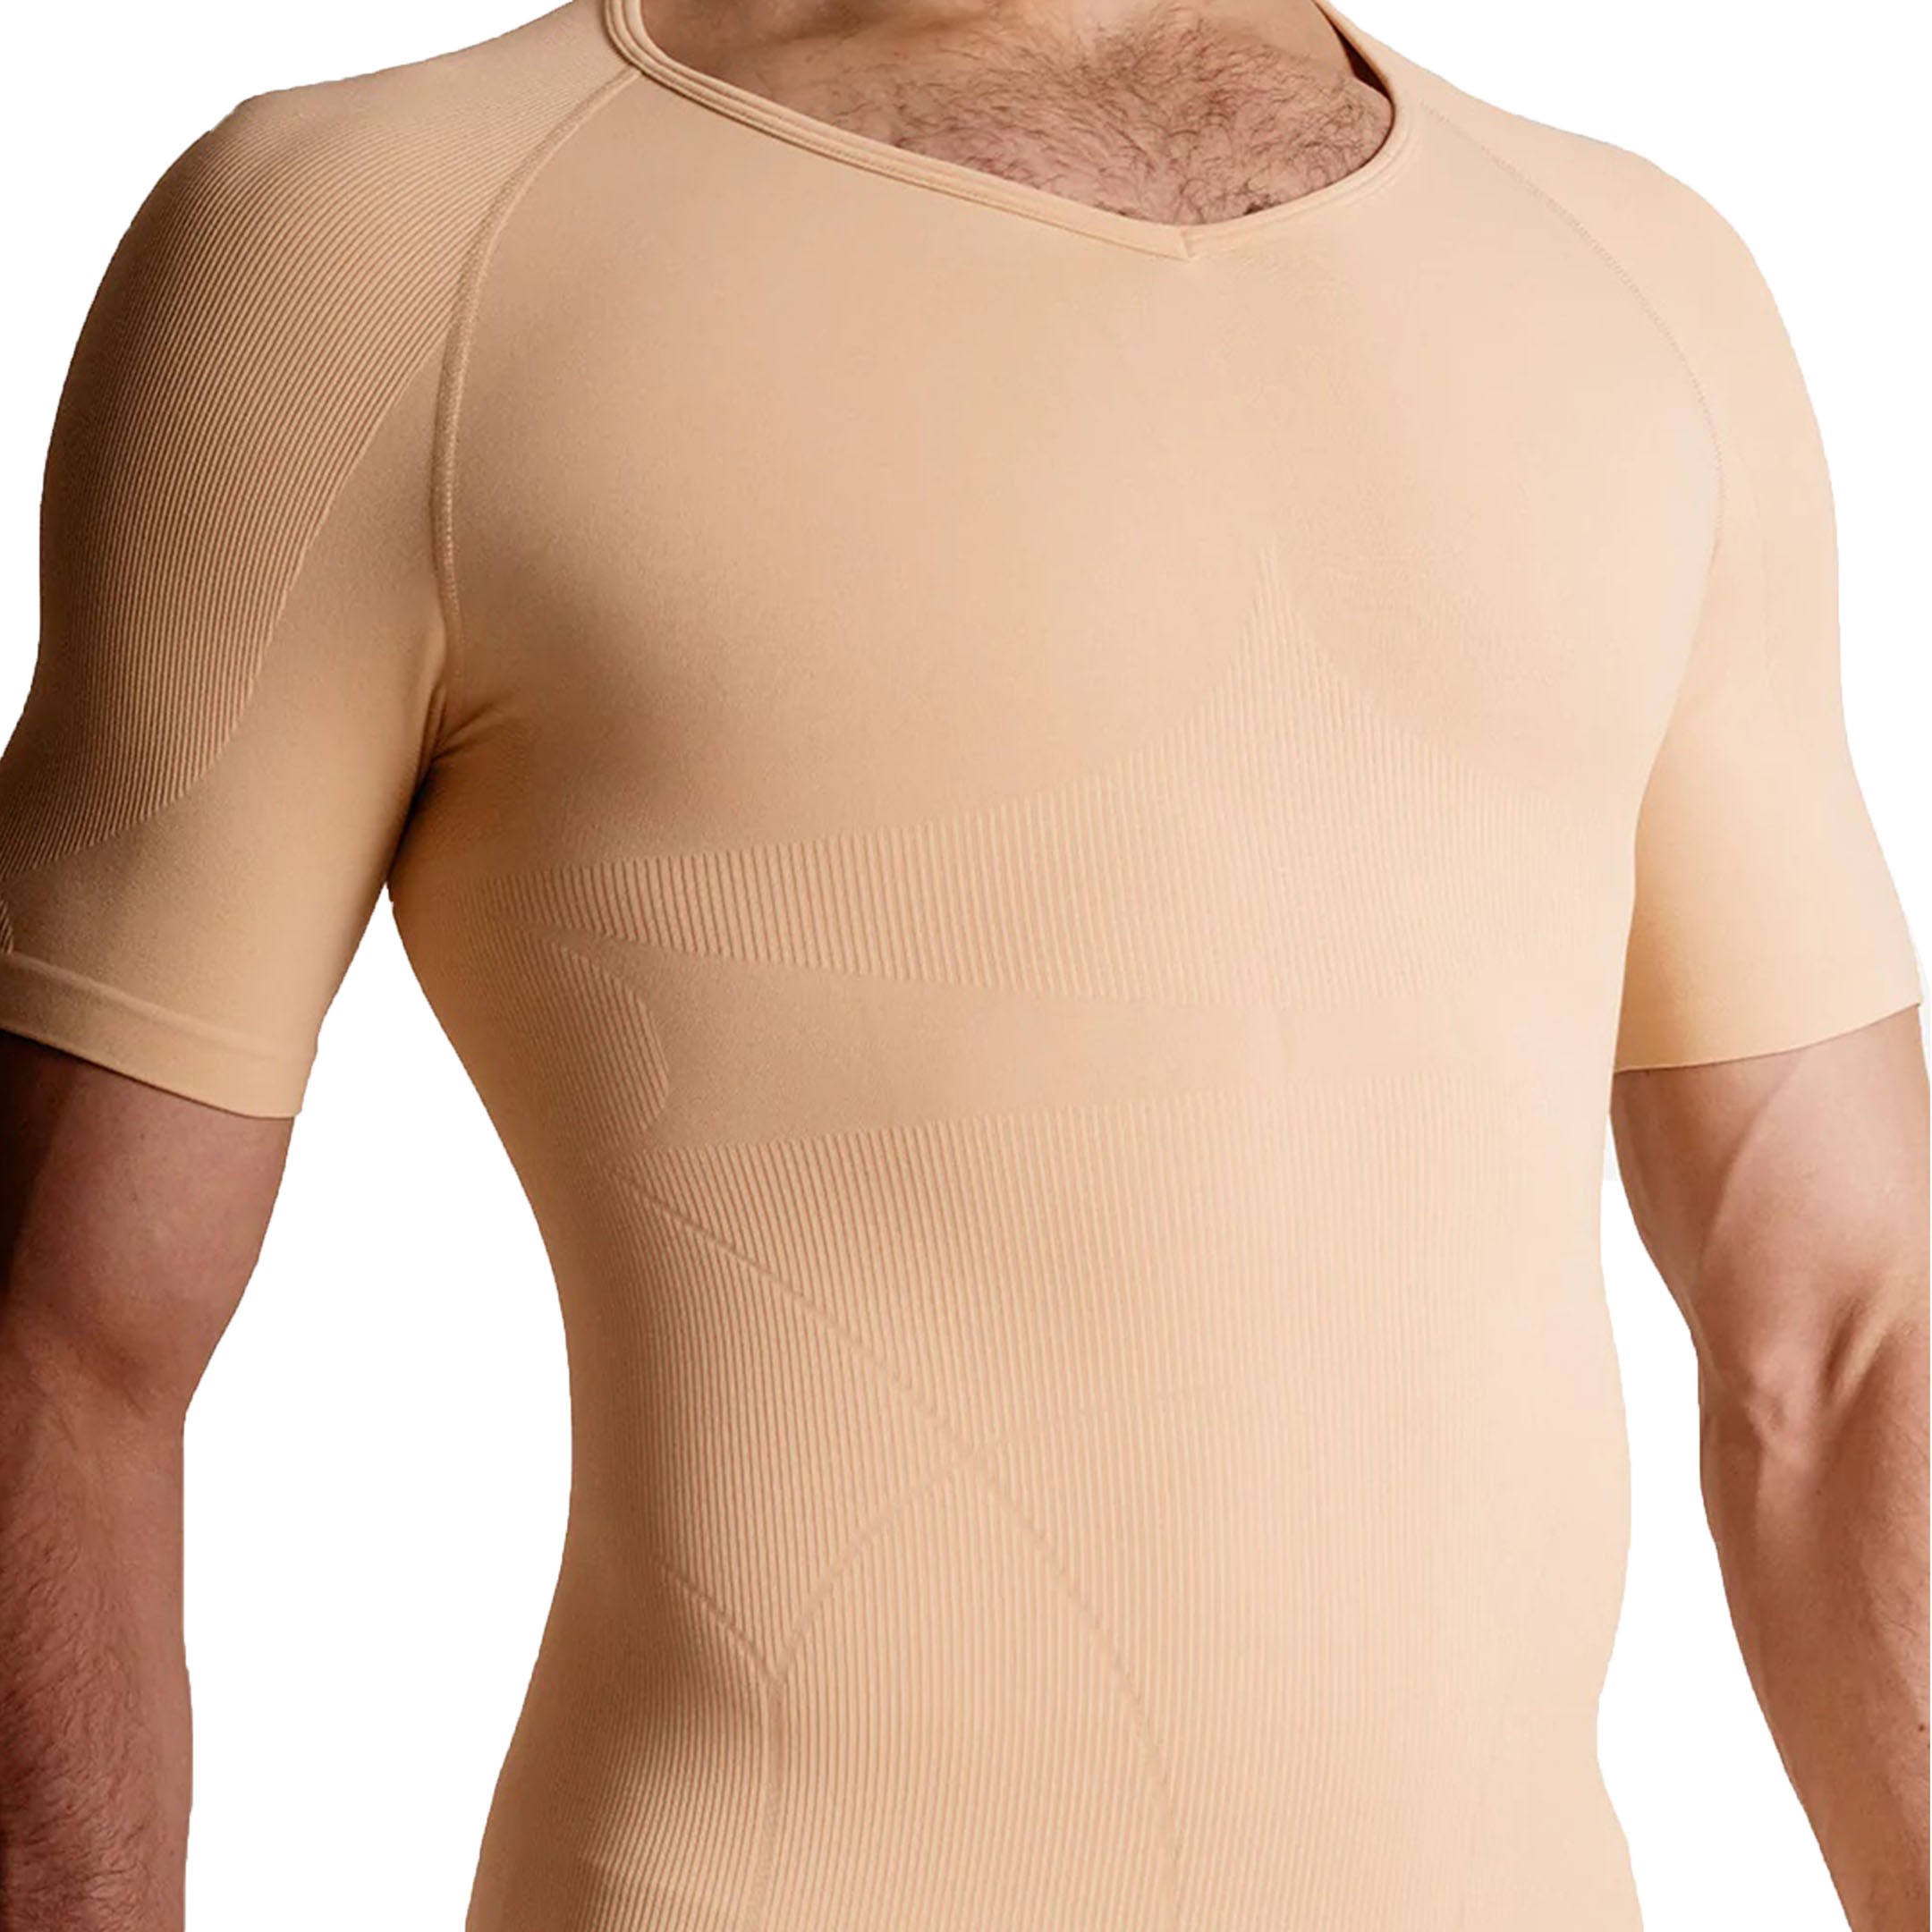 https://www.inderwear.com/148802/seamless-compression-t-shirt-nude-rounderbum.jpg